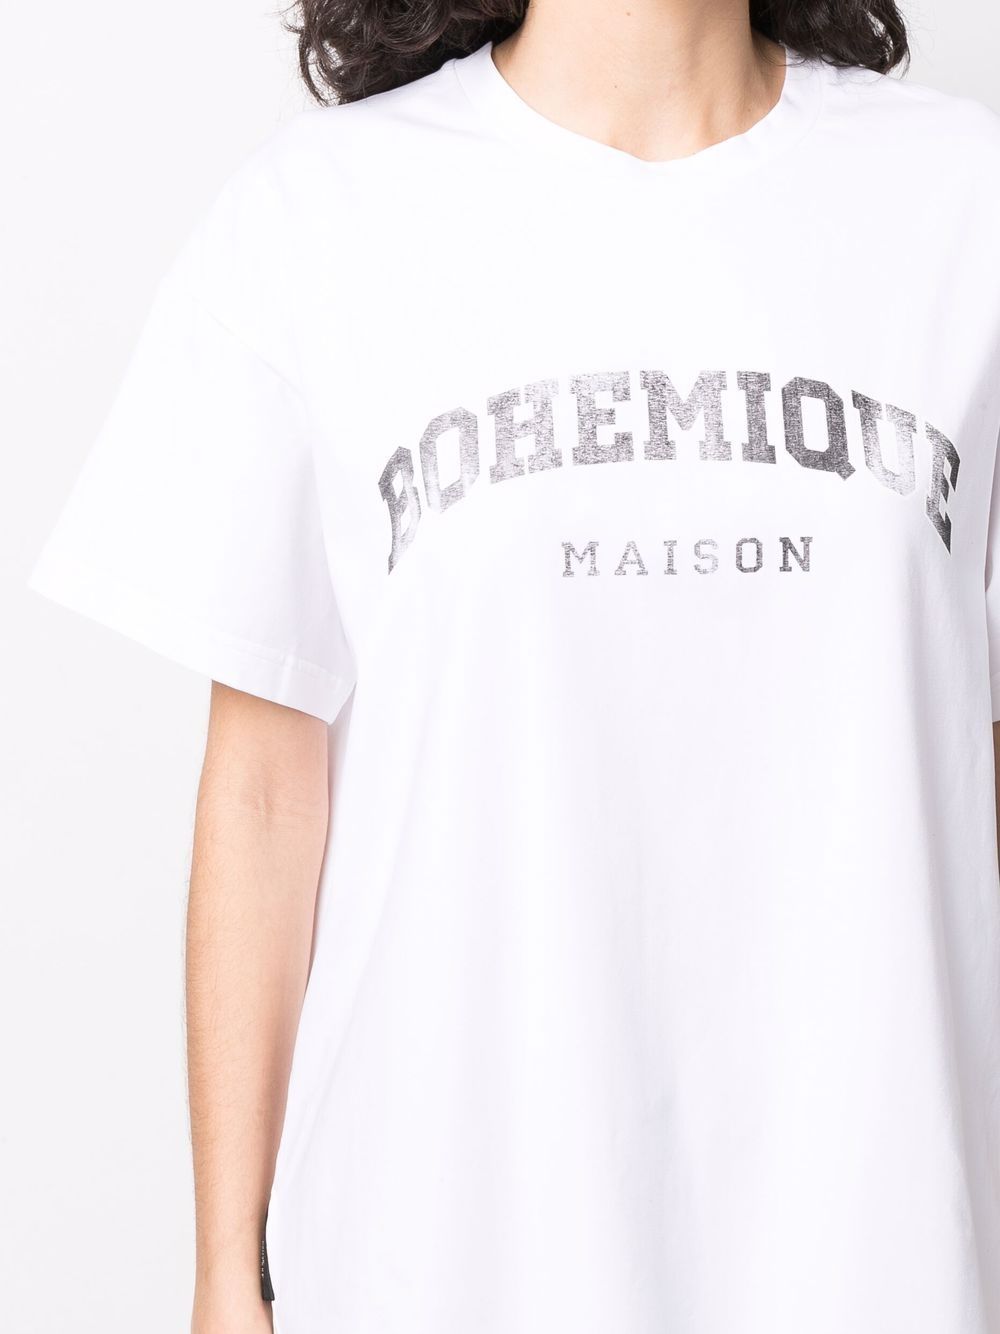 фото Maison bohemique футболка с логотипом и подтяжками